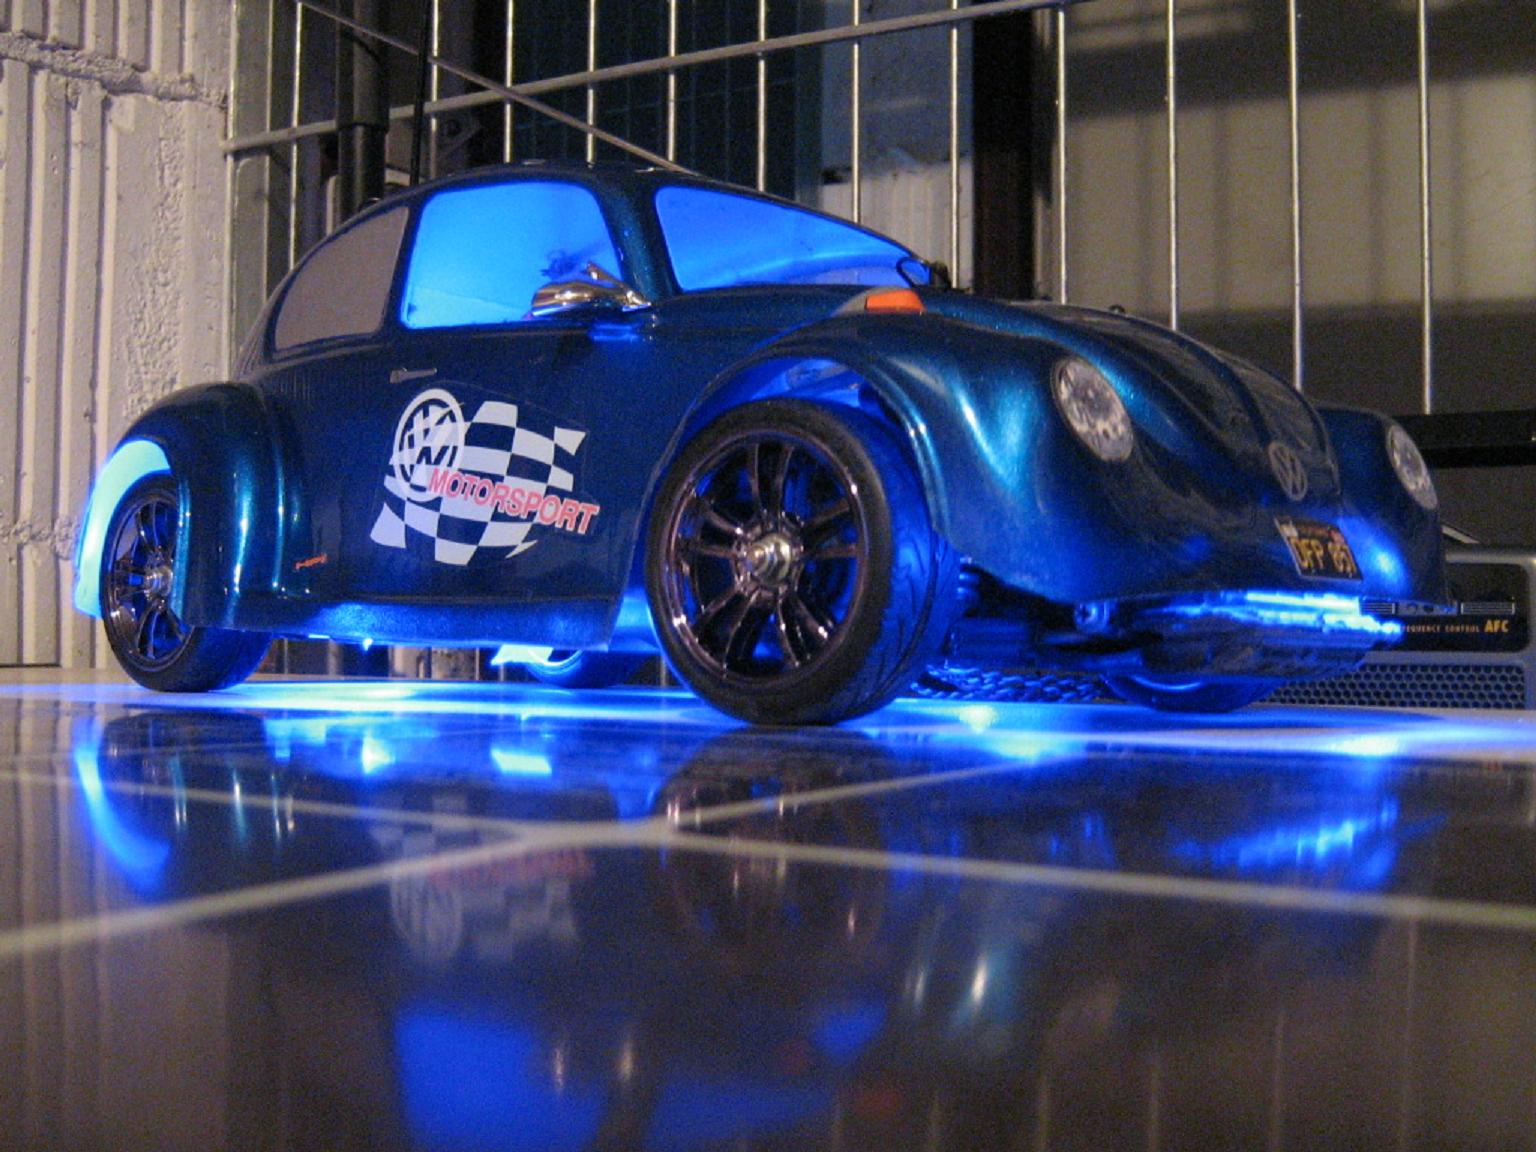  Beleuchtung RC Car - LEDs & Zubehör Modellbau Sounds  Blitzlicht - LED Unterbodenbeleuchtung BLAU 8,5cm Länge